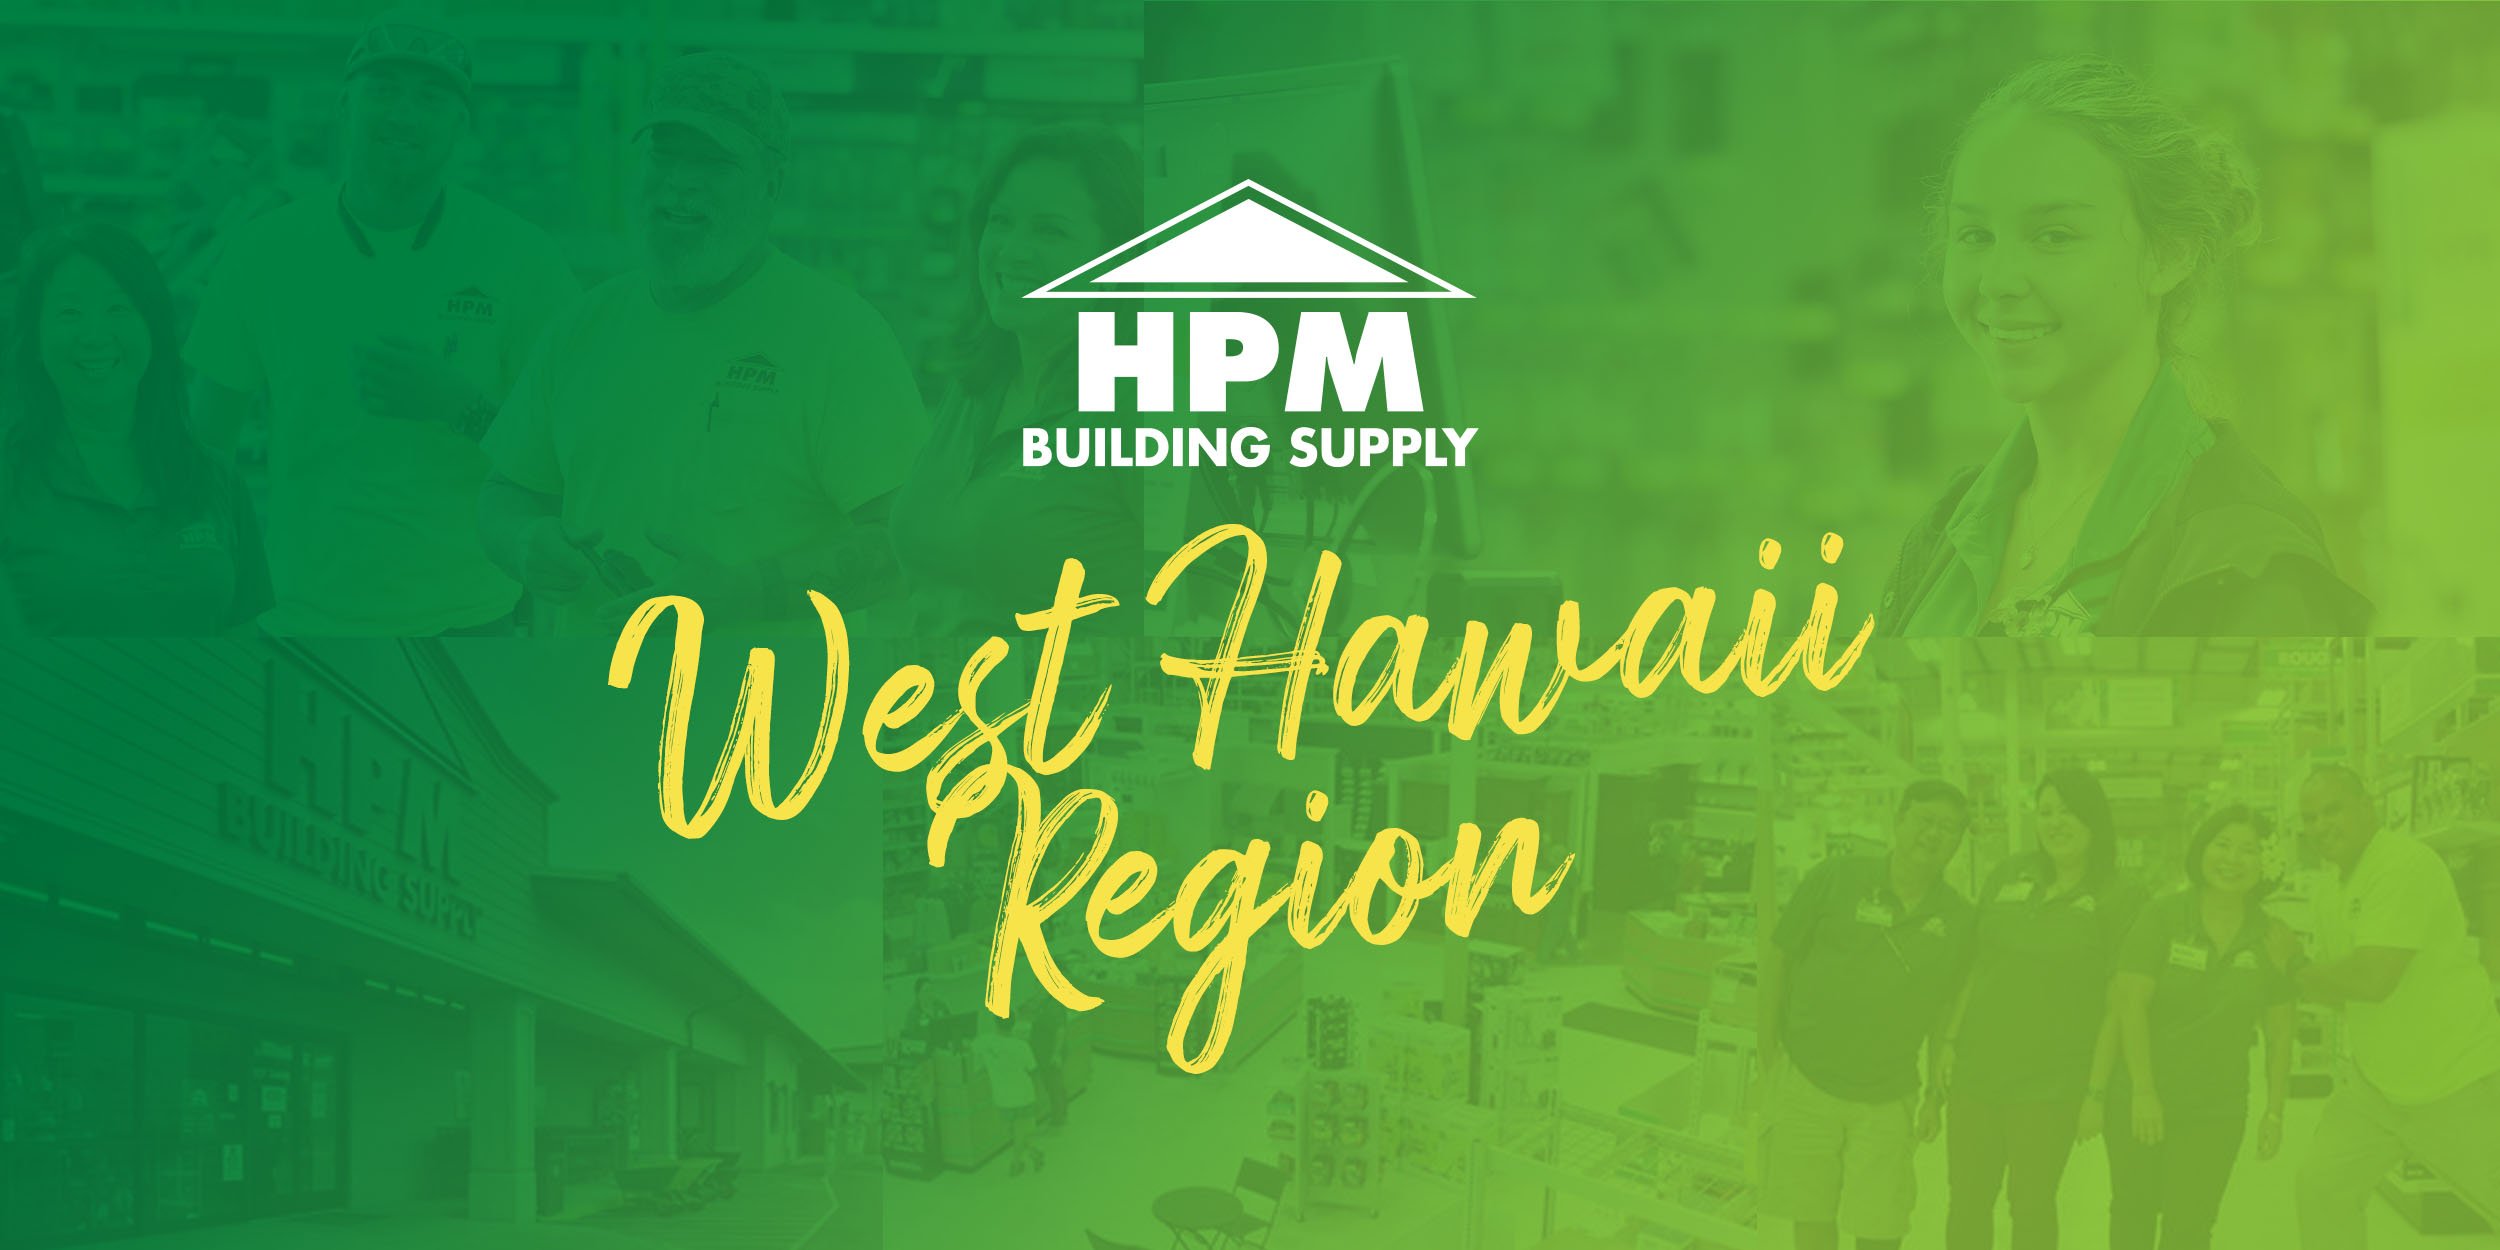 HPM Building Supply: West Hawaii Region